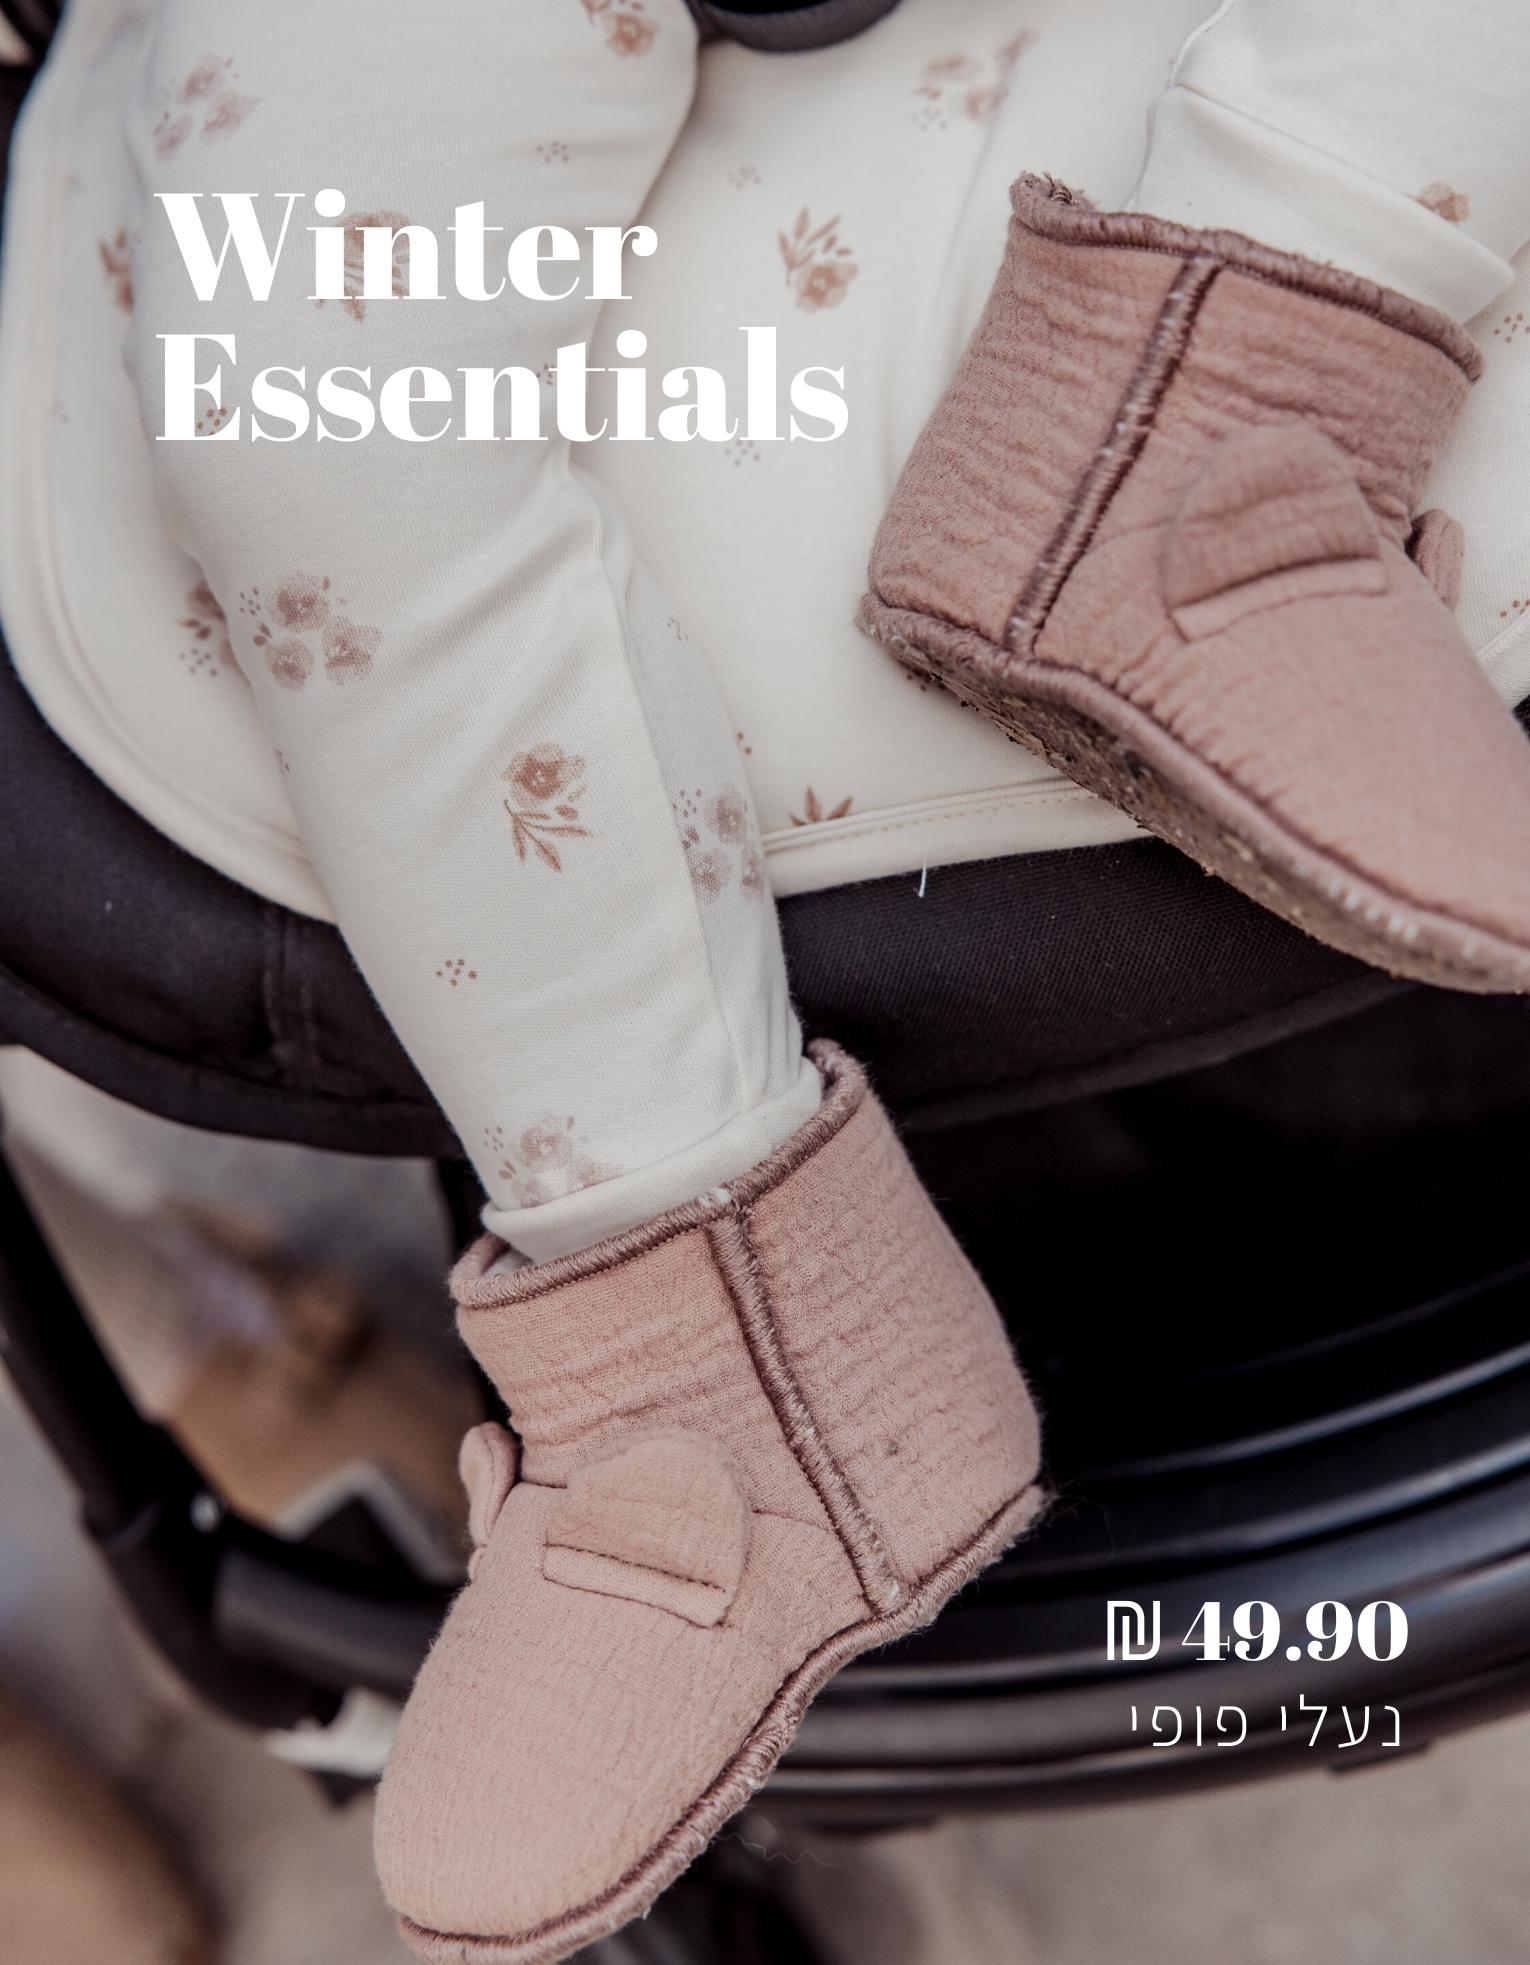 winter essentials. נעלי פופי 49.90